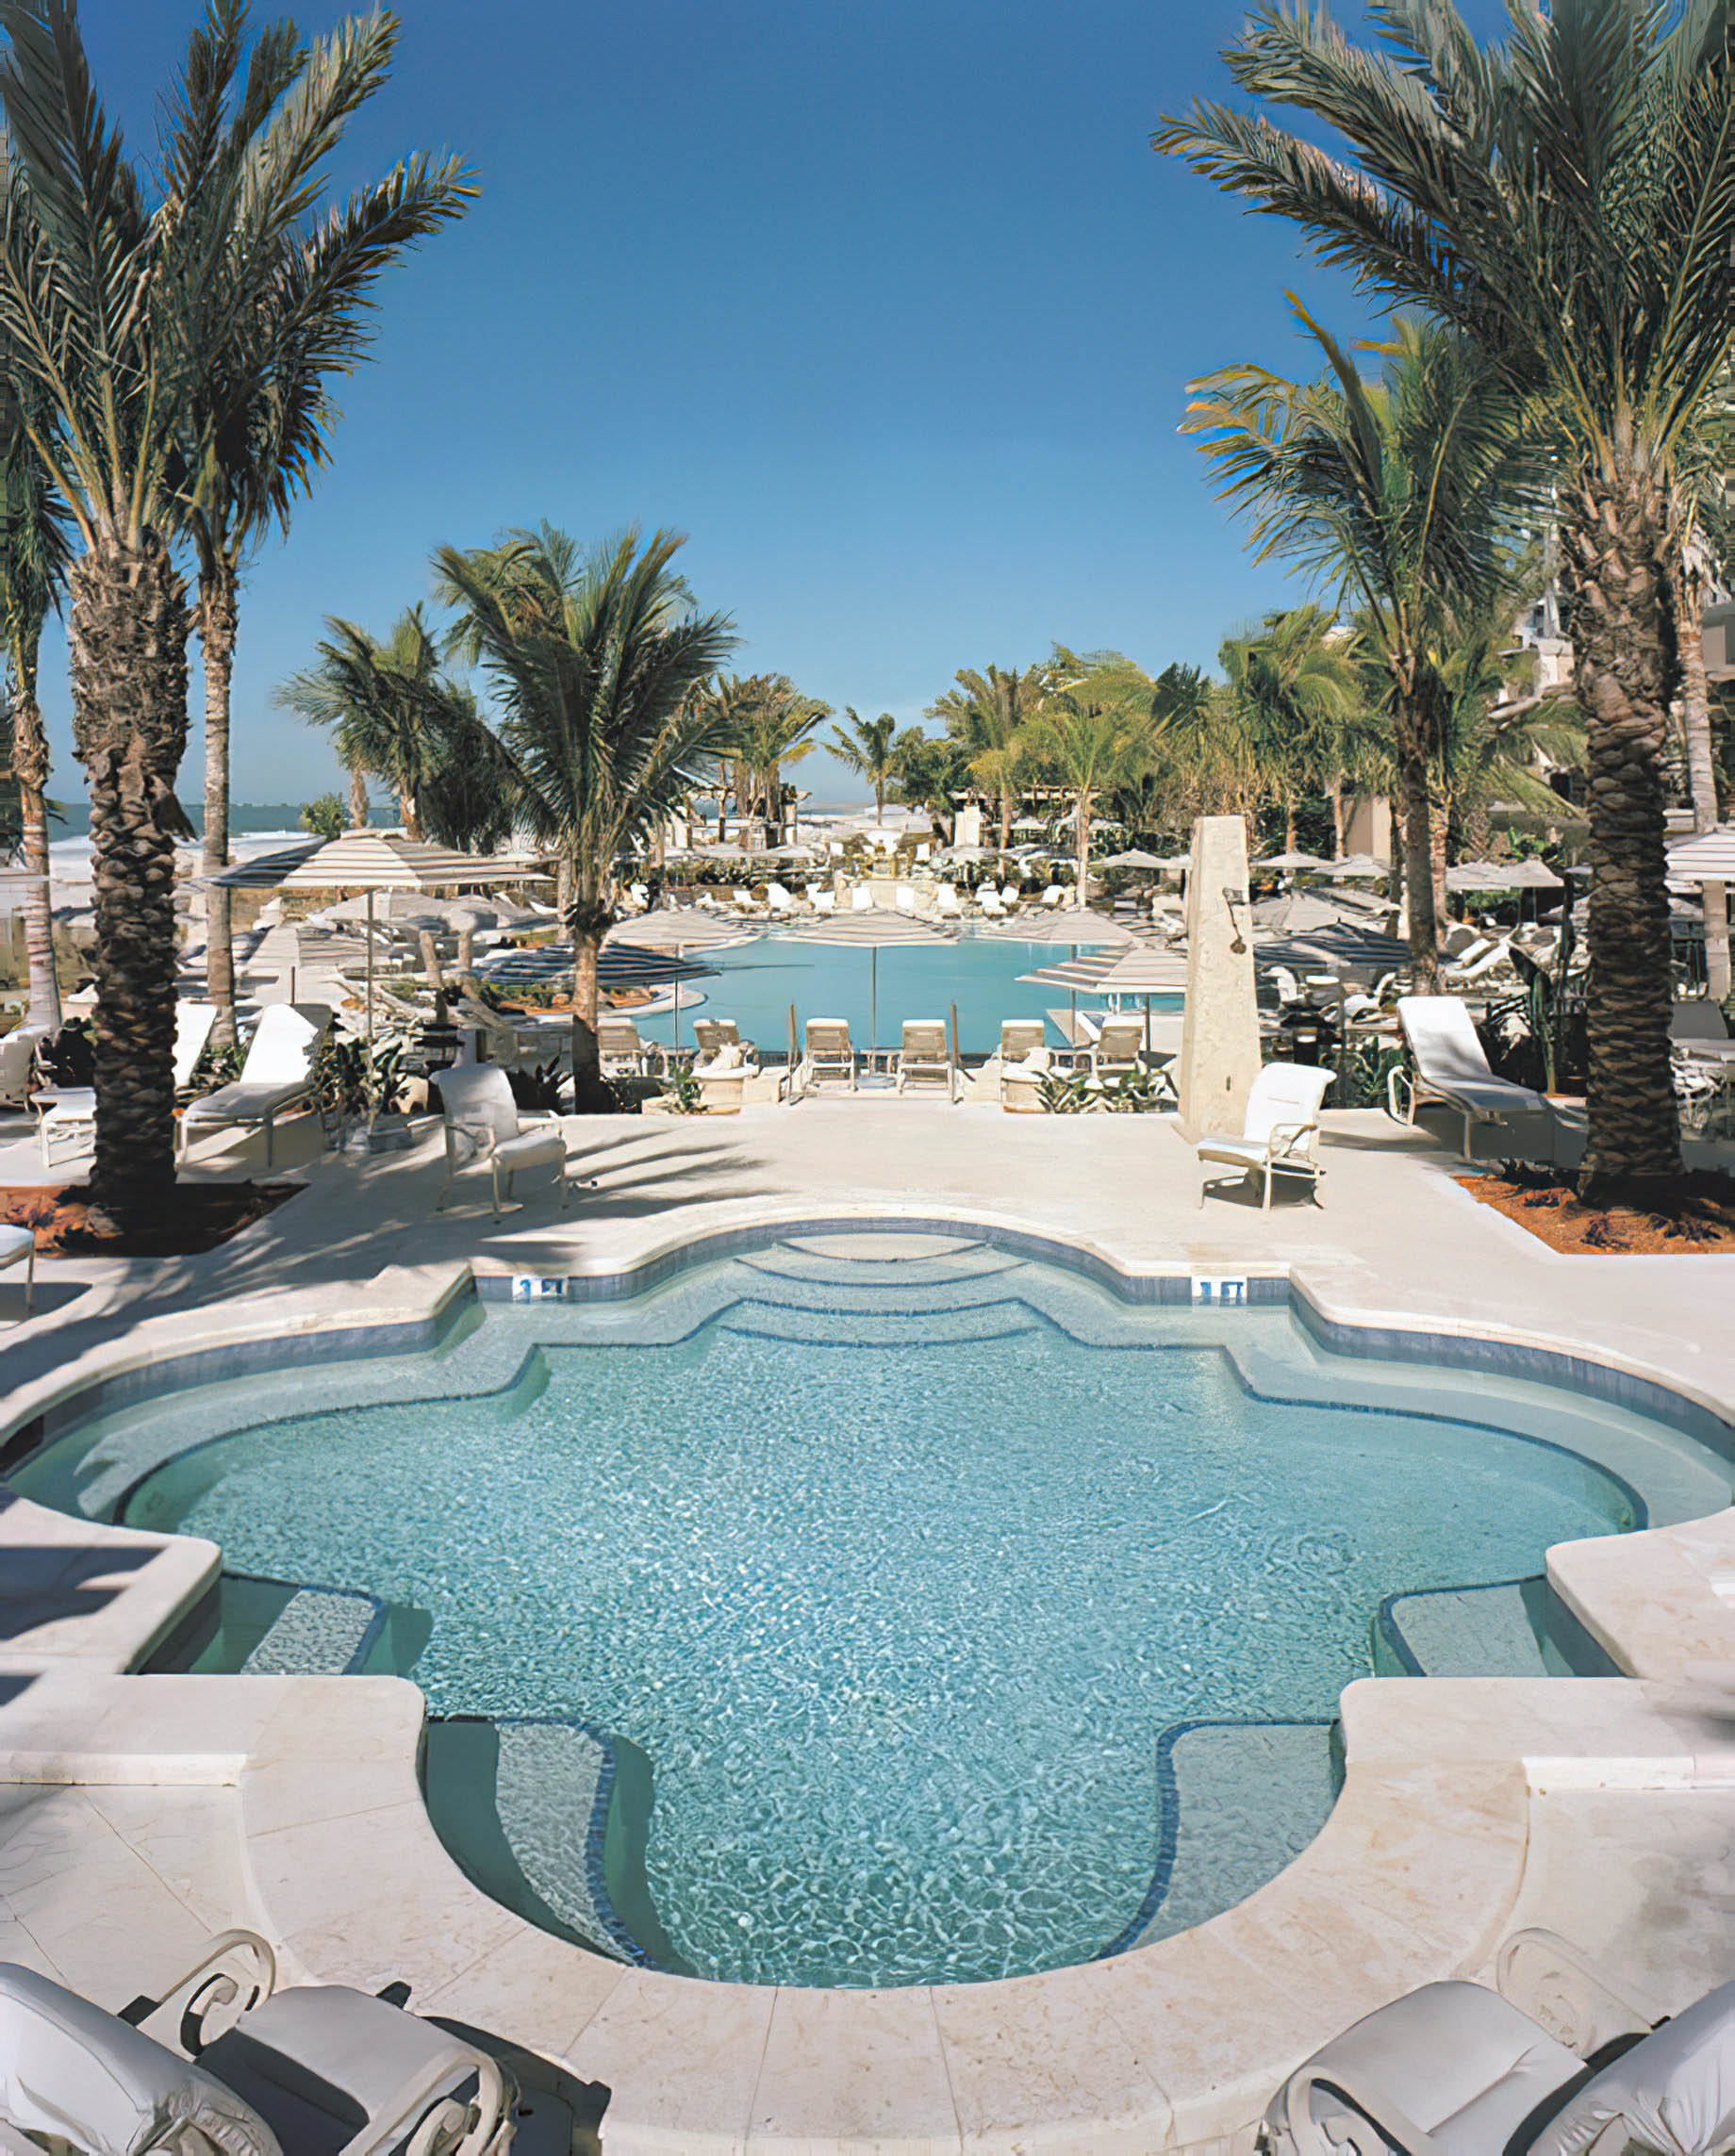 The Ritz-Carlton Beach Club Resort - Lido Key, Sarasota, FL, USA - Exterior Pool Deck